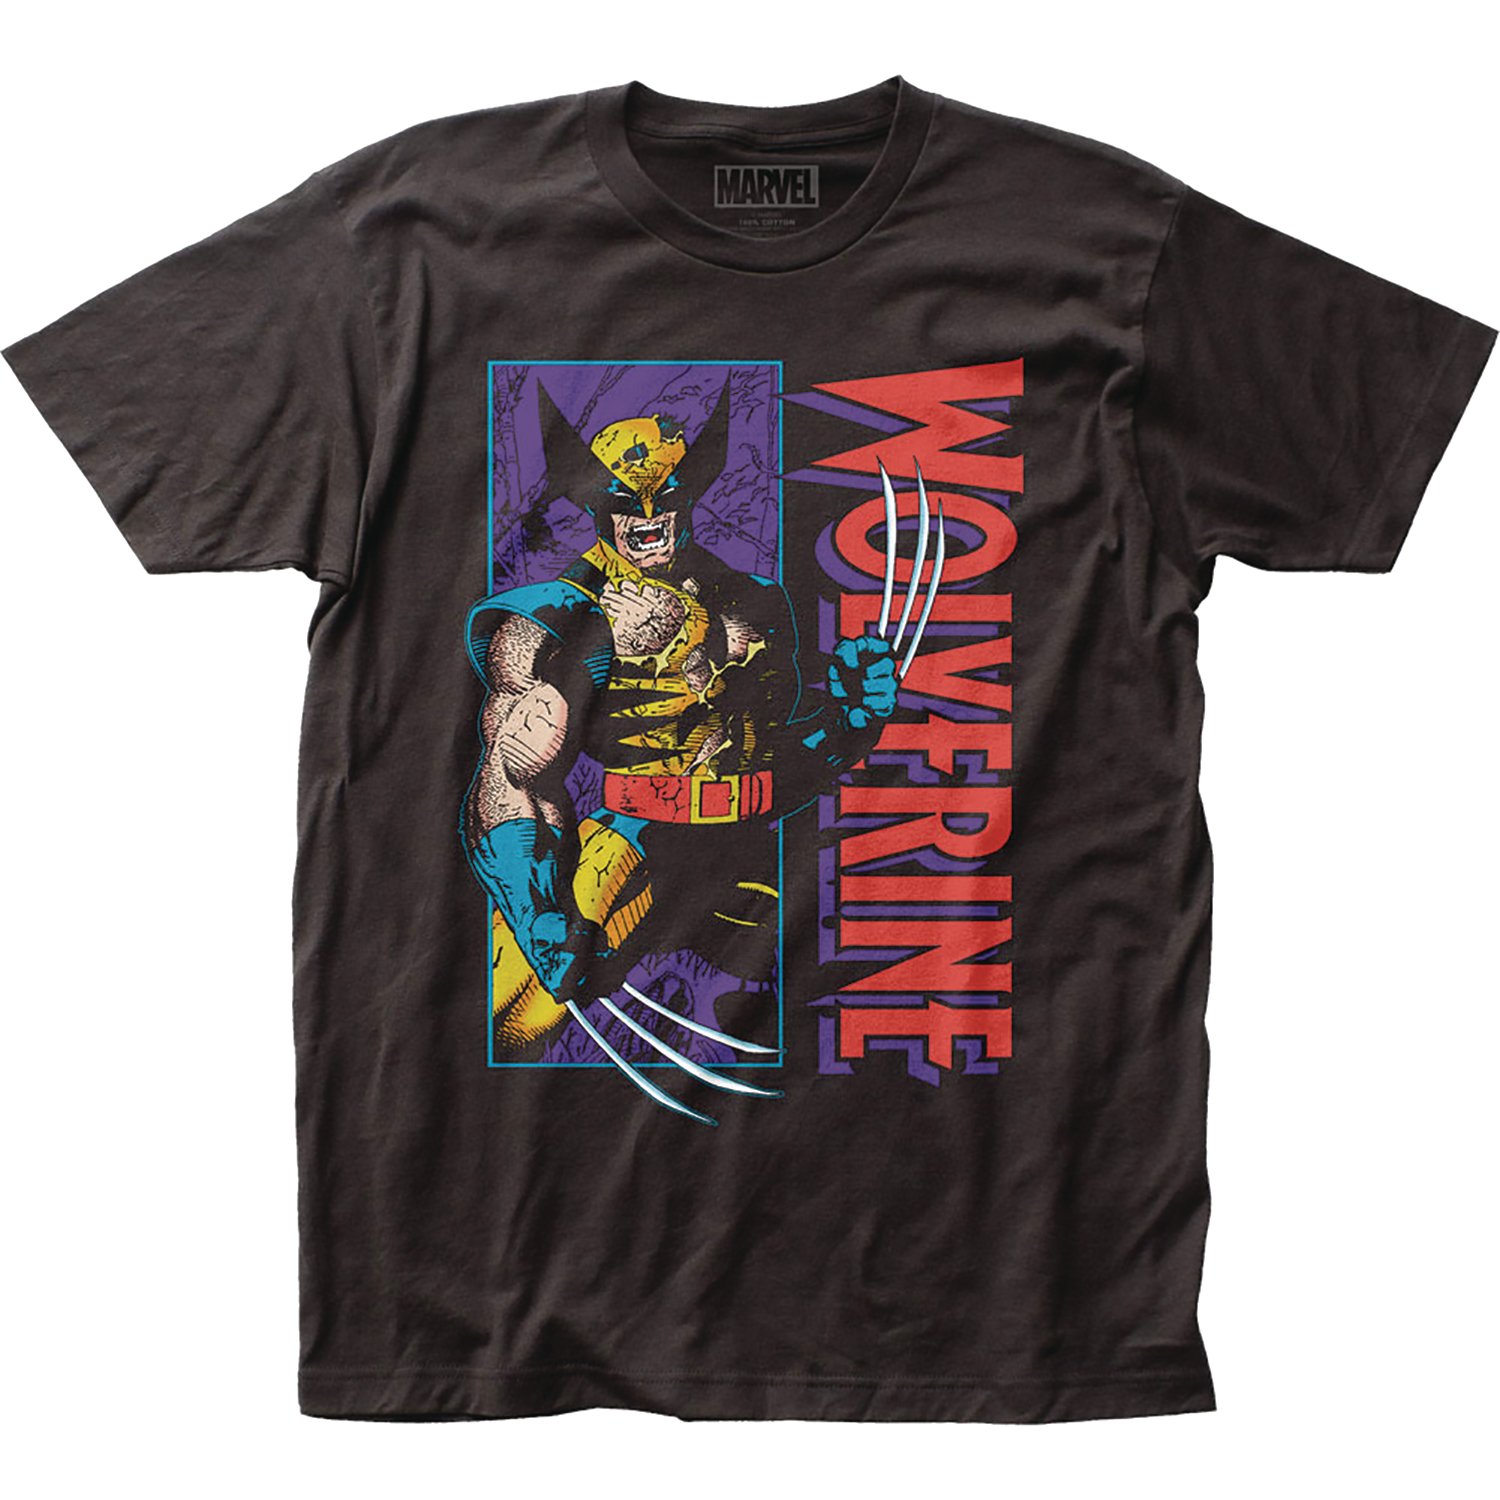 Marvel Heroes Wolverines Shredded T-Shirt Small